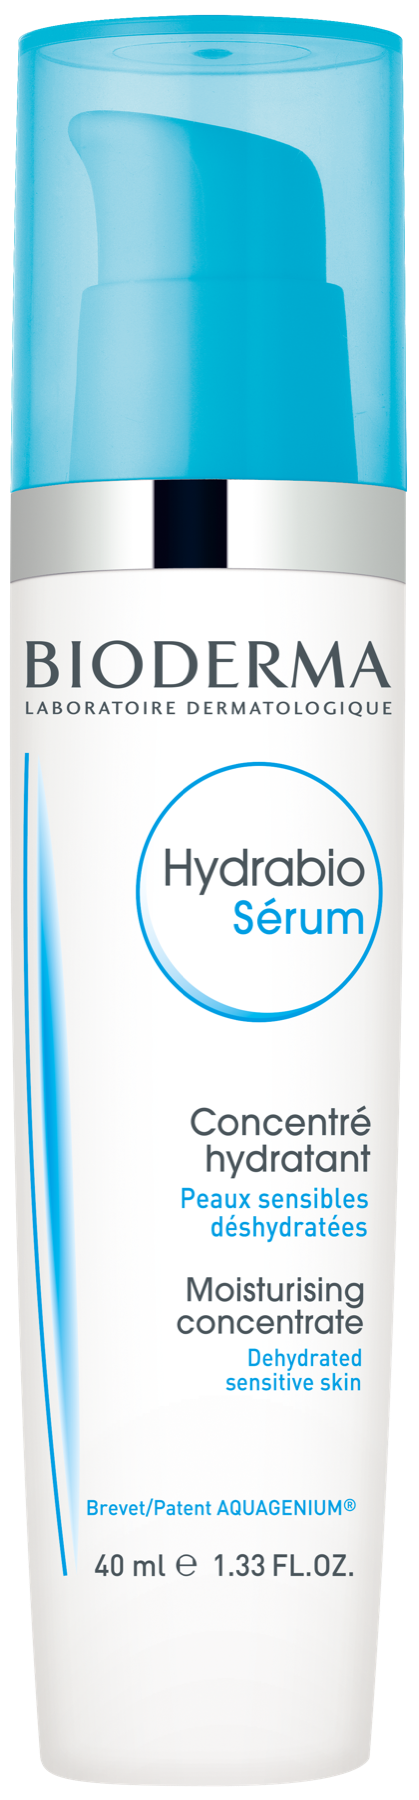 Hydrabio Serum 40ml HD (1).png